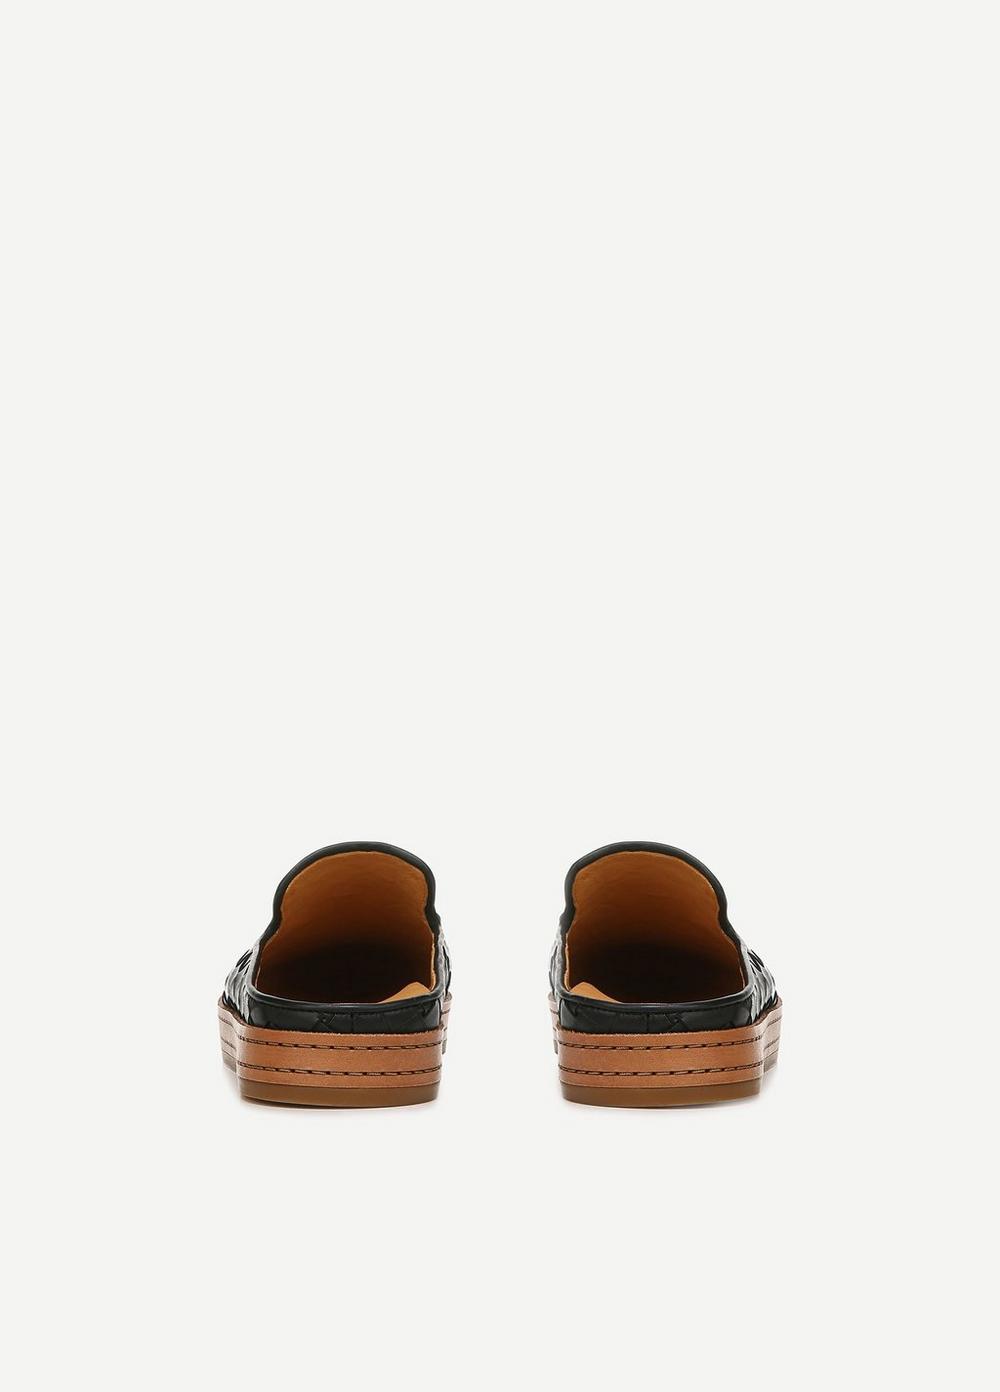 Canella Woven Leather Slip On Sandal